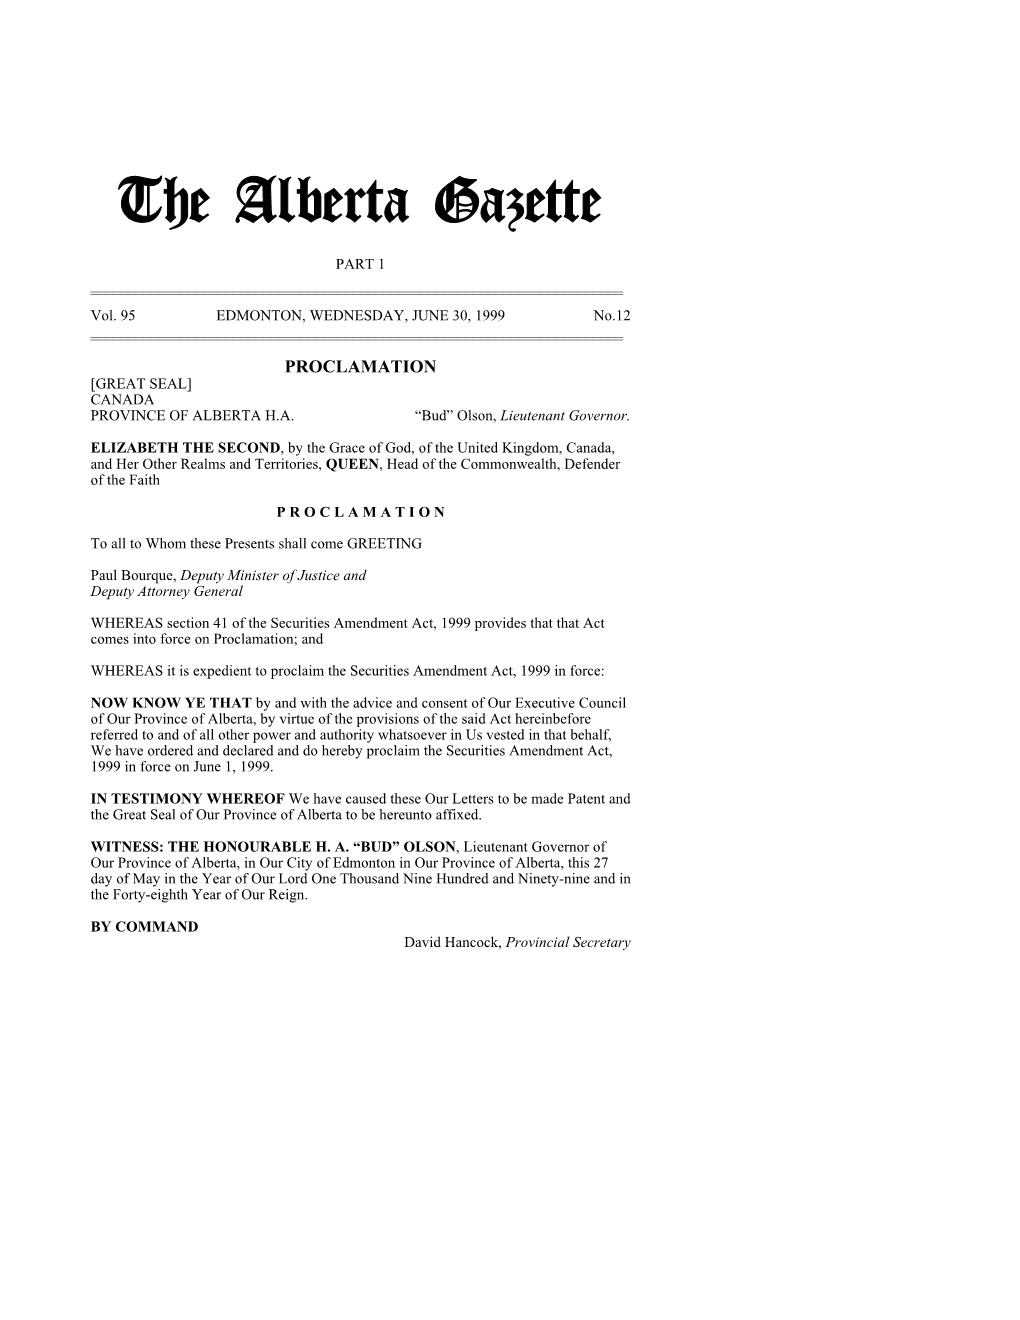 The Alberta Gazette, Part I, June 30, 1999